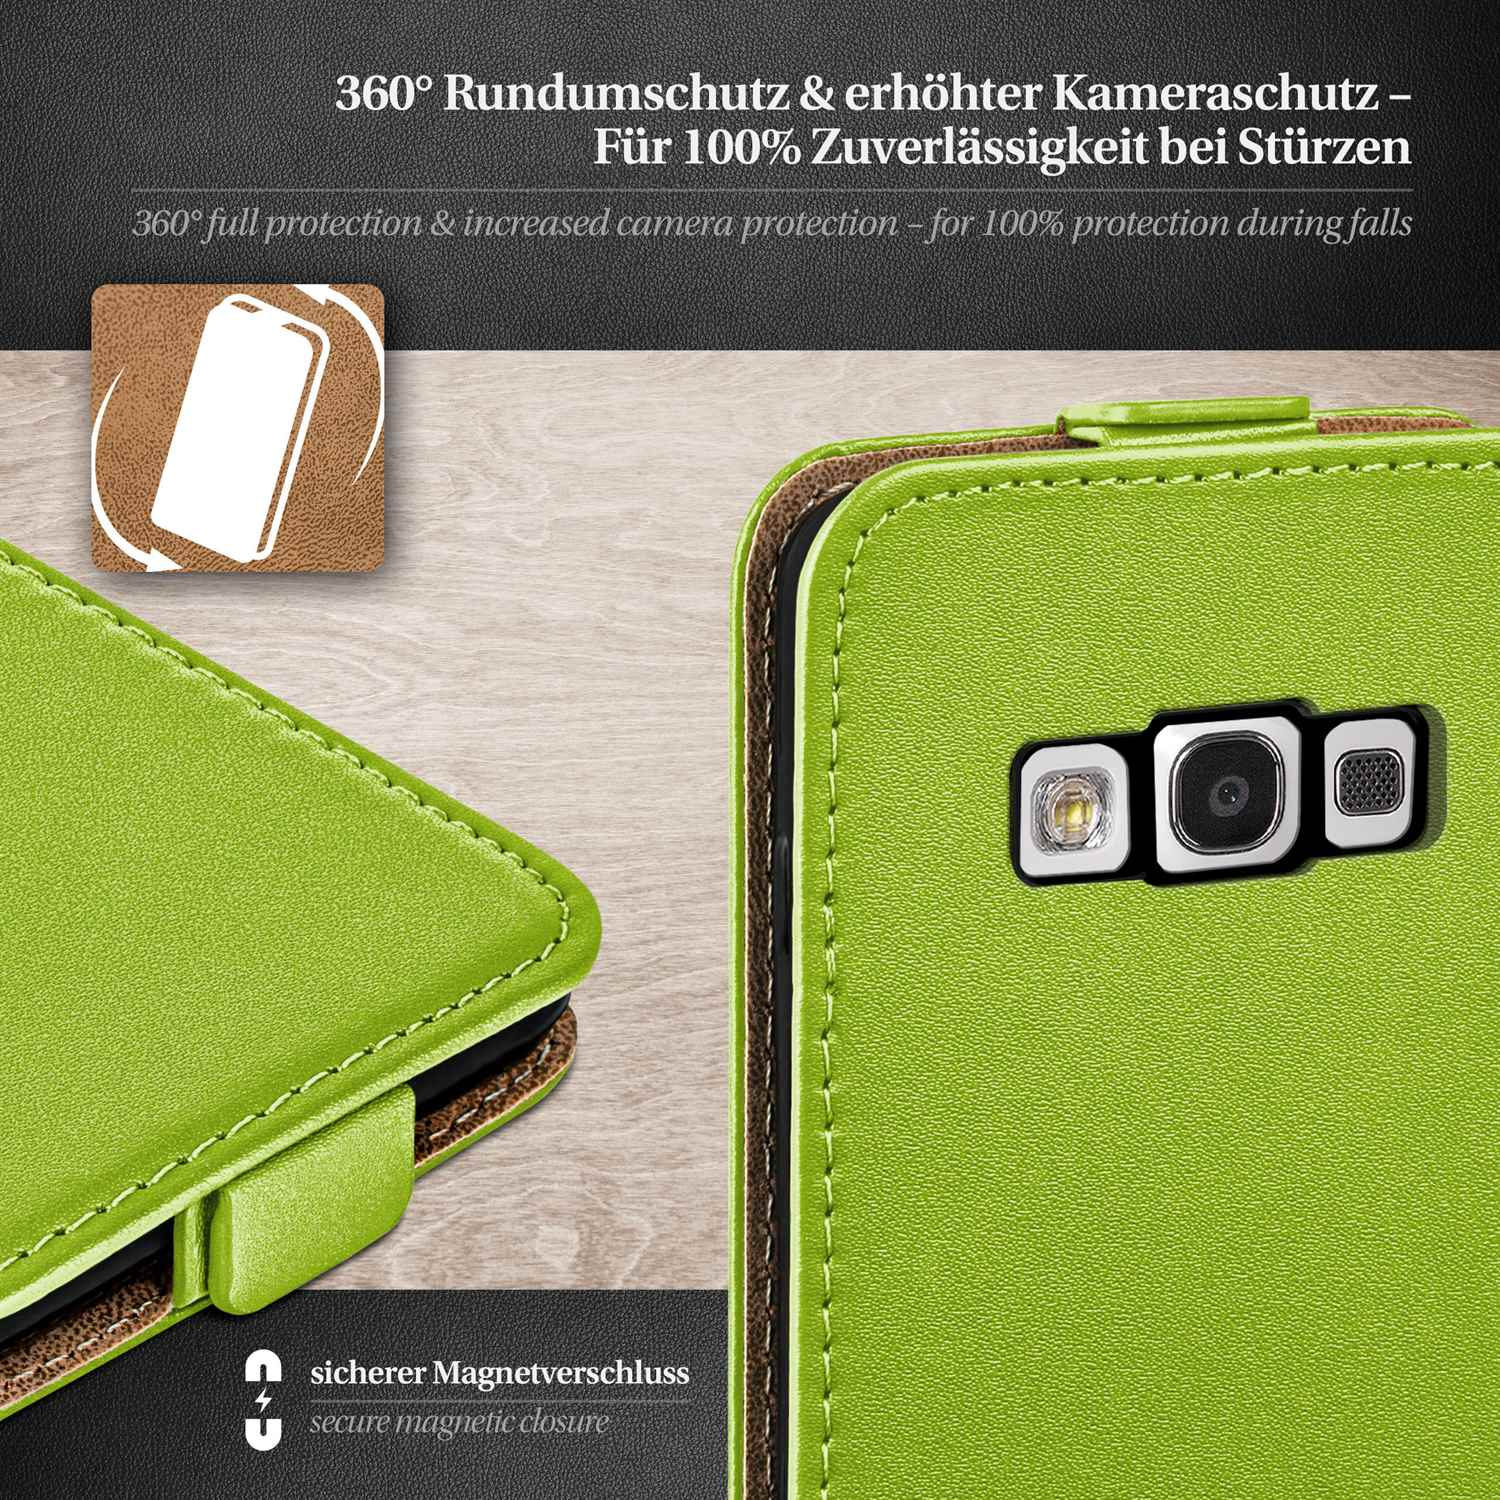 MOEX Flip Case, Flip Galaxy Cover, S3, Samsung, Lime-Green